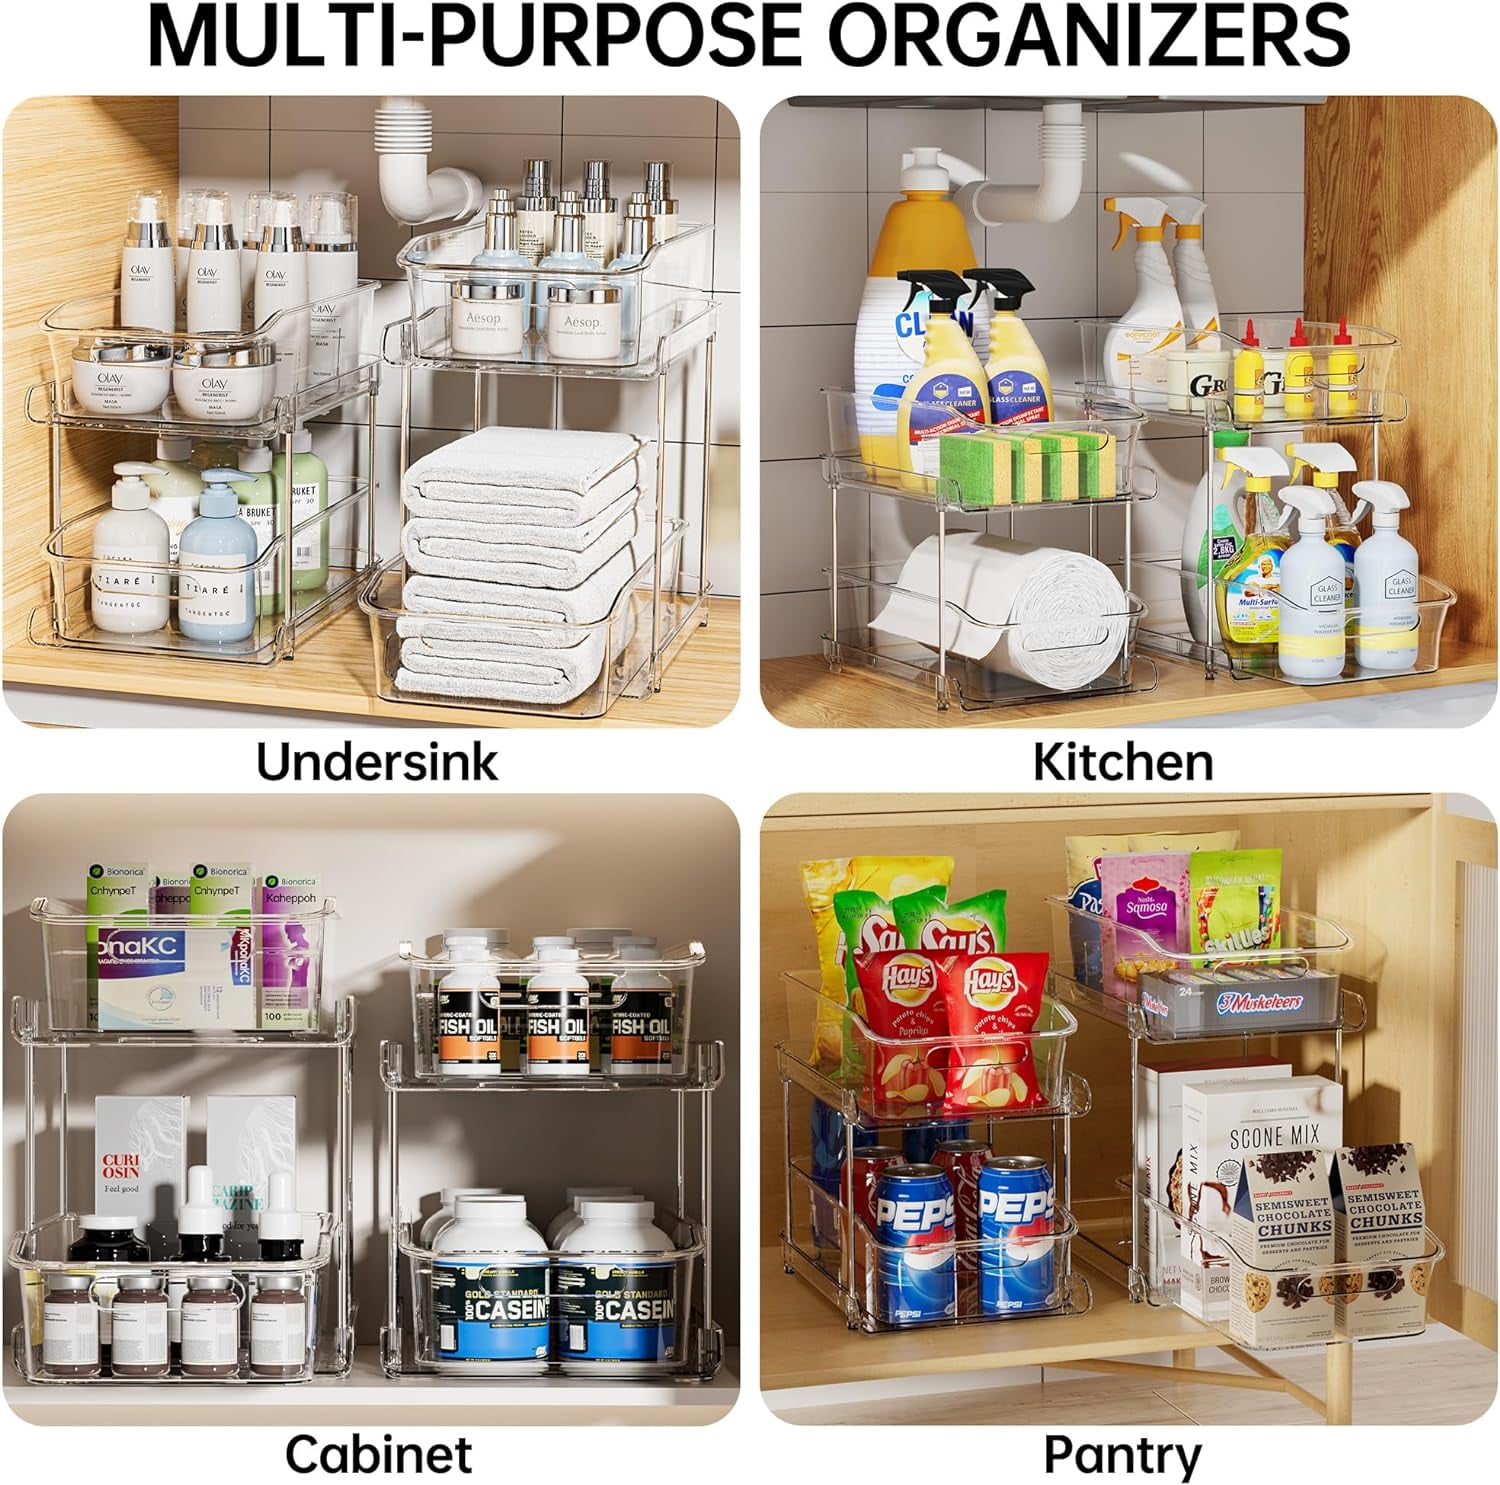  Dutiplus Medicine Cabinet Organizer 2-Tier Pull-and-Rotate  Shelf Storage Rack Organizer for Holding Prescription Bottles, Cosmetics  11 H x 4 W x 11.22 L : Home & Kitchen